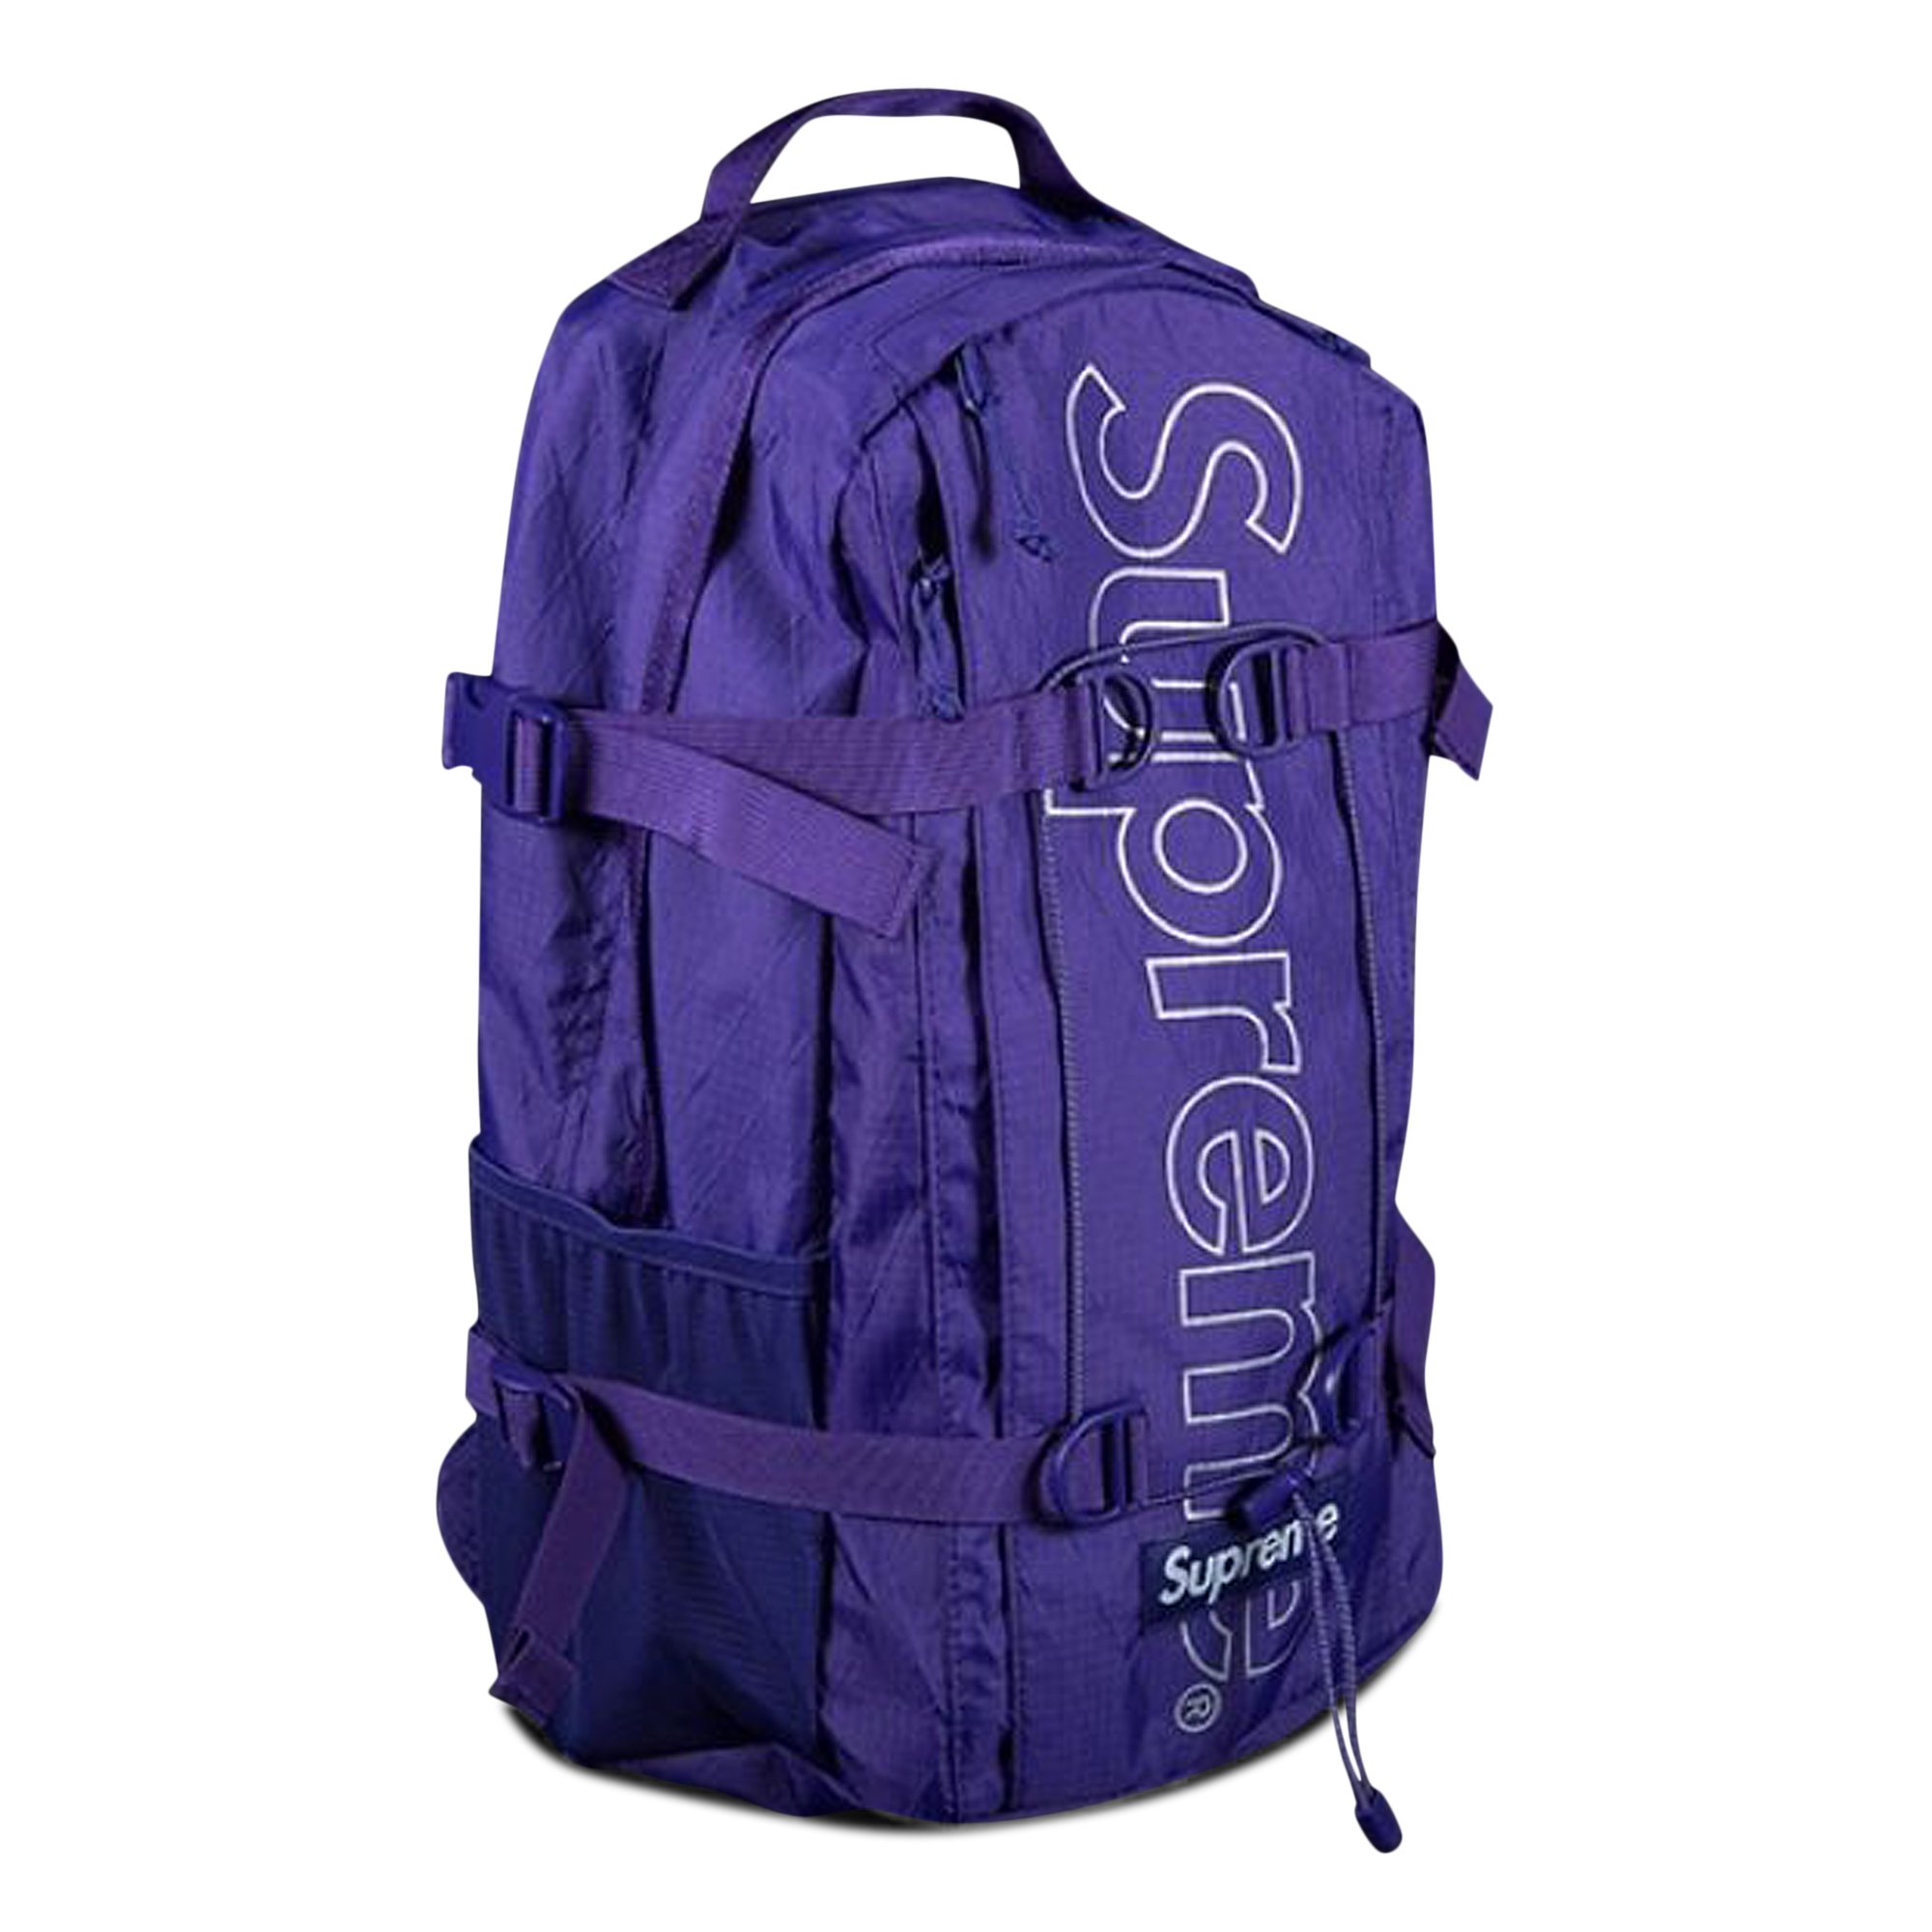 Buy Supreme Backpack 'Purple' - FW18B8 PURPLE | GOAT